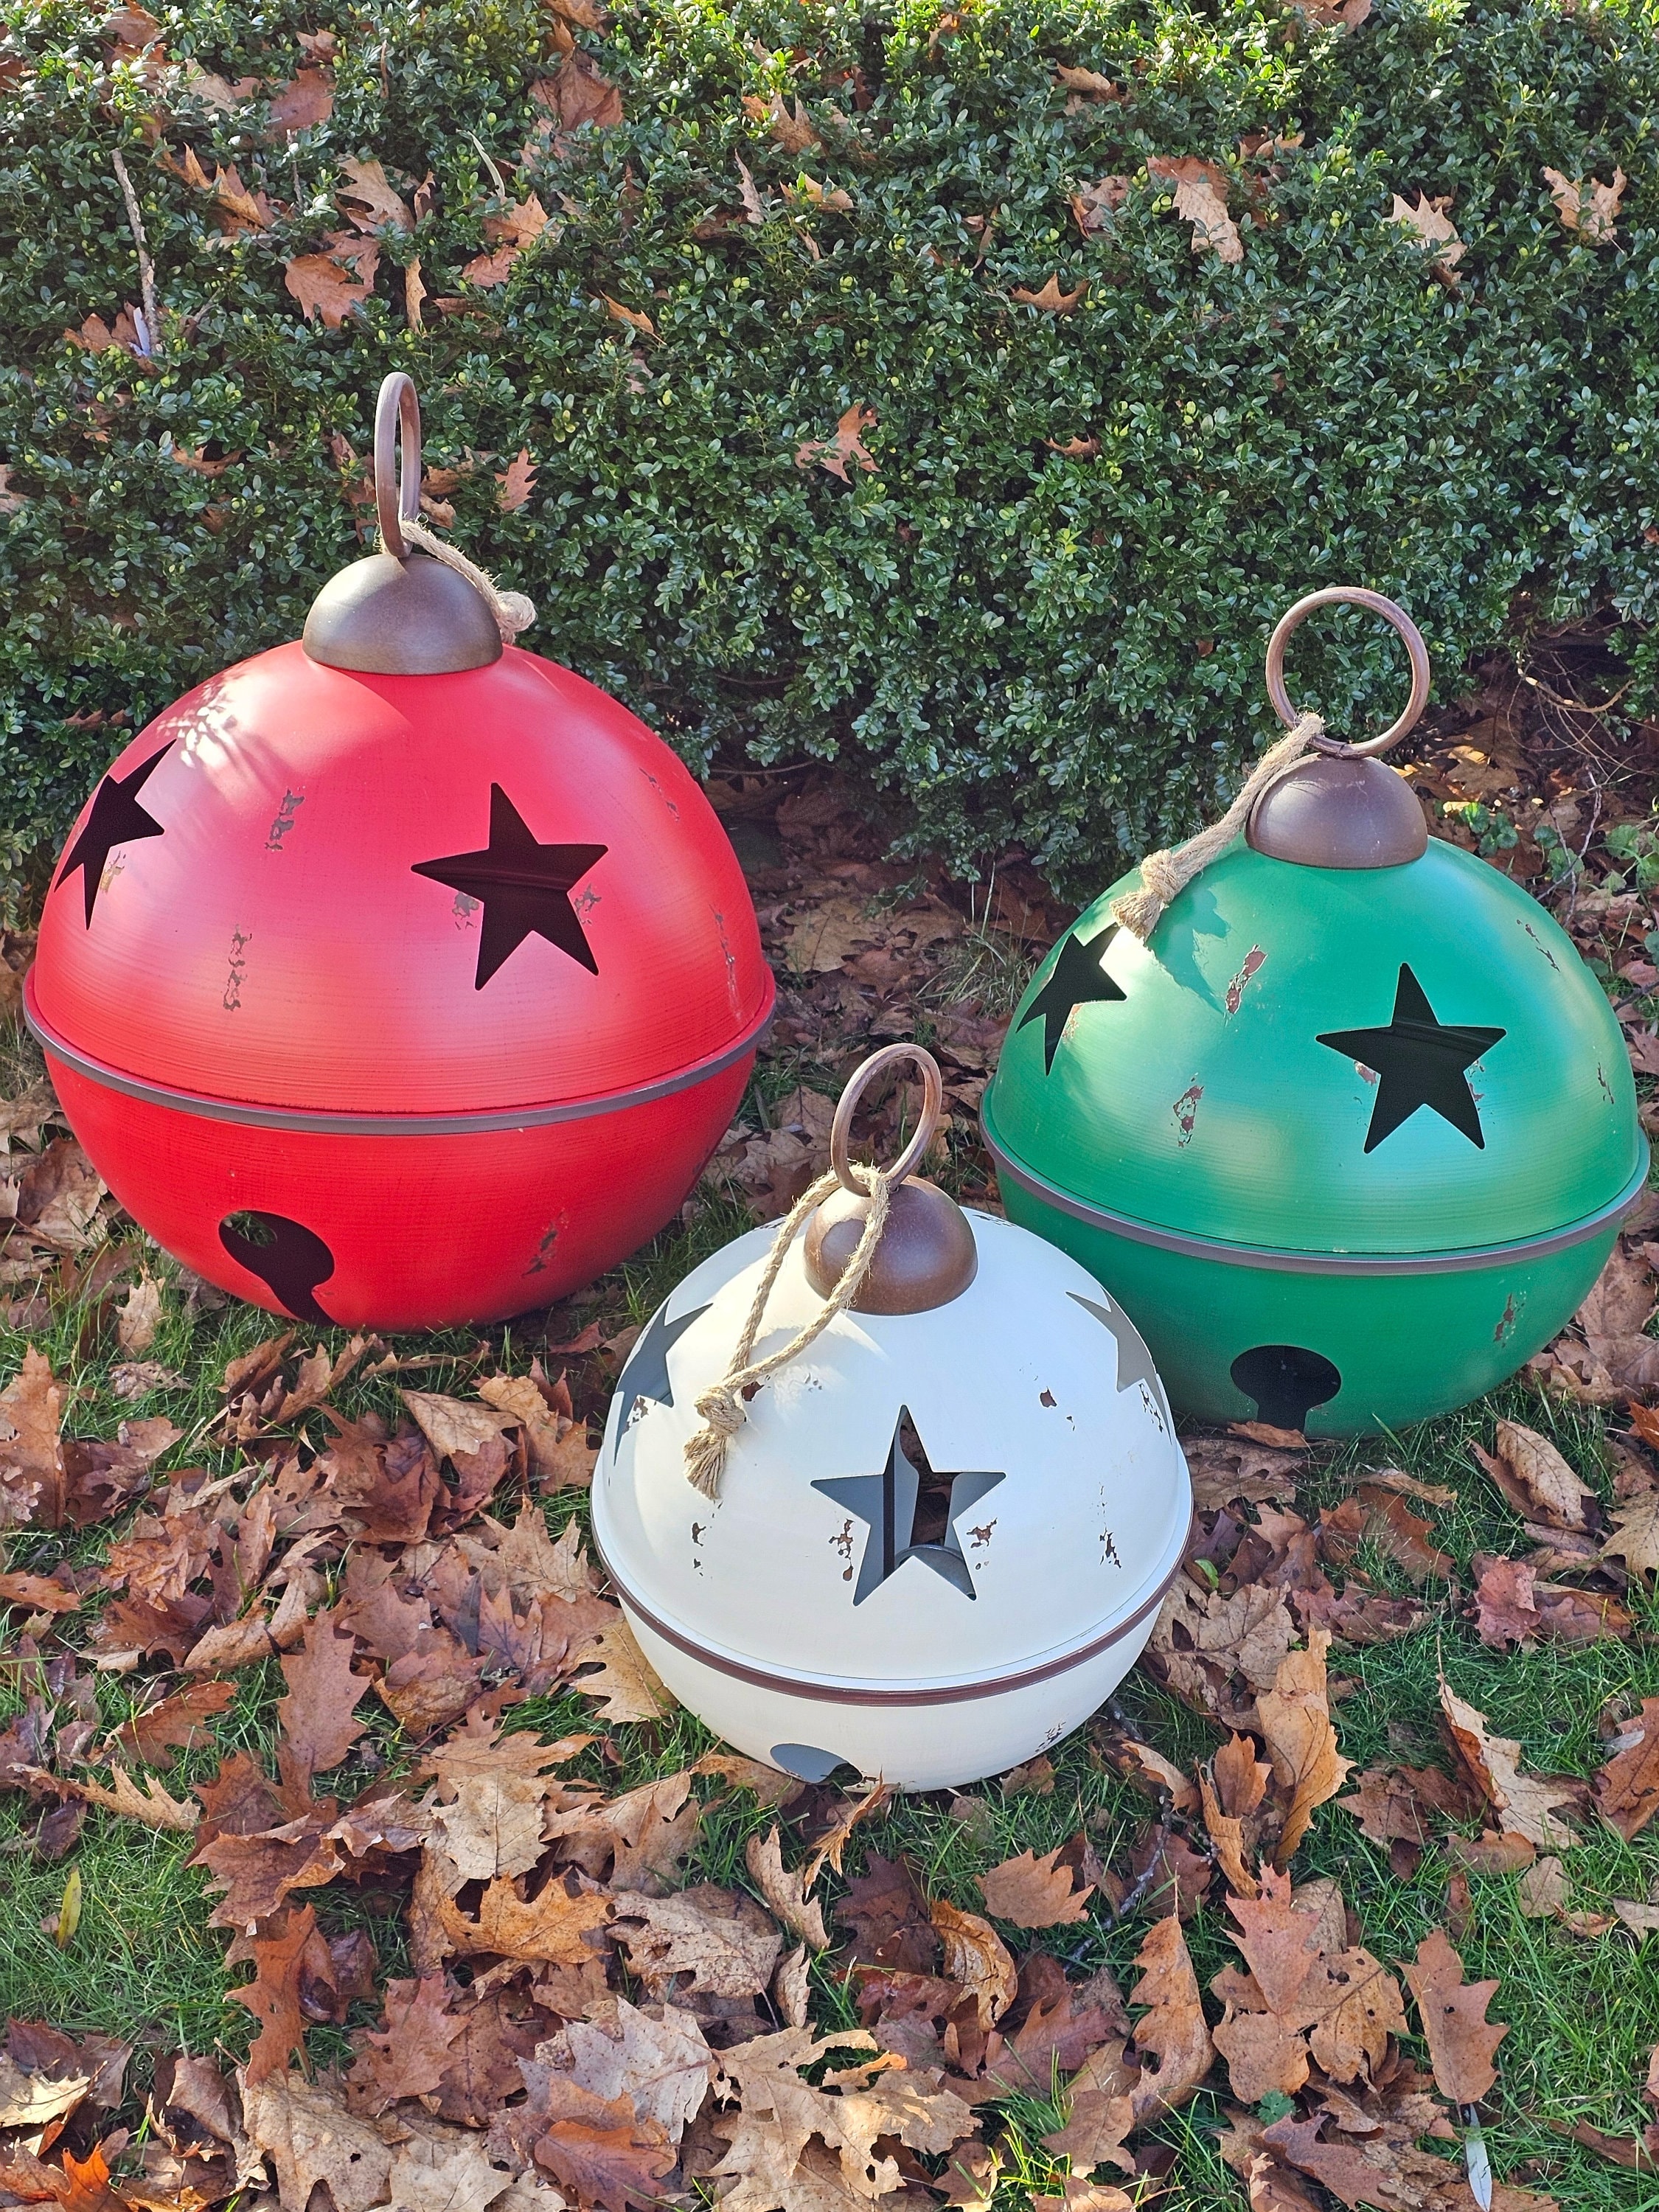 NUOBESTY 10Pcs Mini Bells Christmas Vintage Jingle Bell Gold Brass Bells  for DIY Craft Christmas Decoration